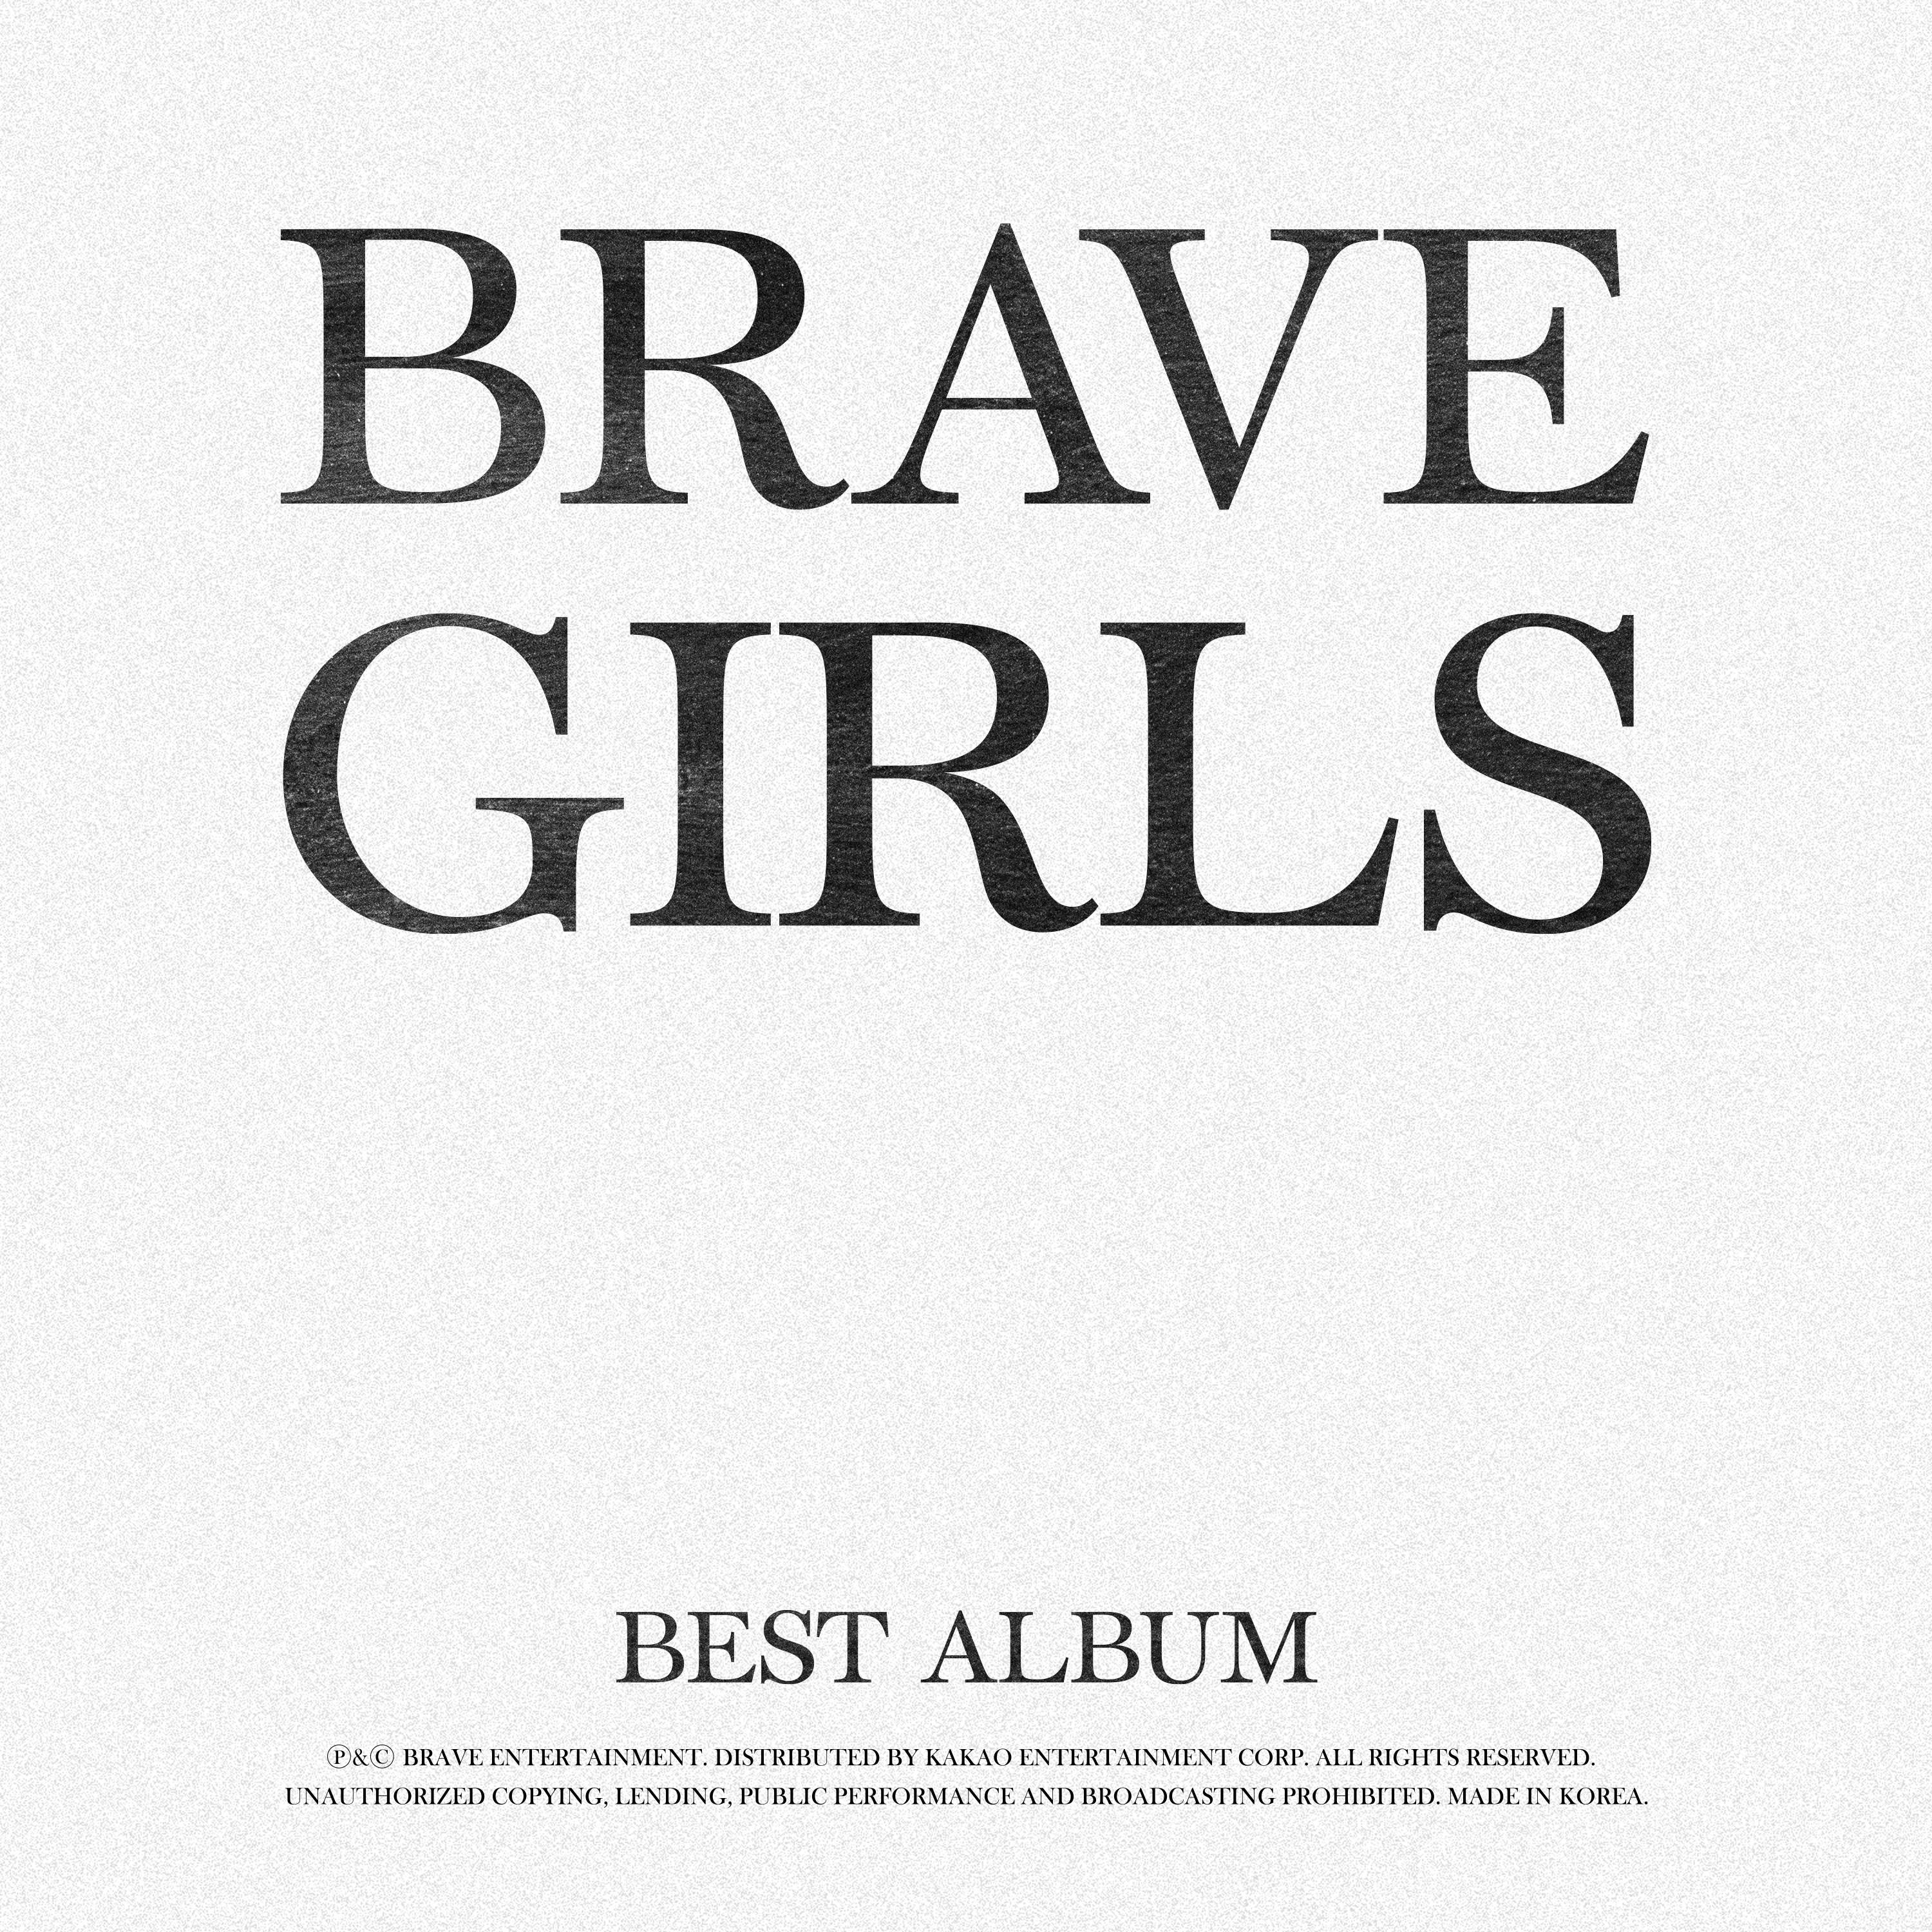 Brave Girls - 아나요 (New Ver.)